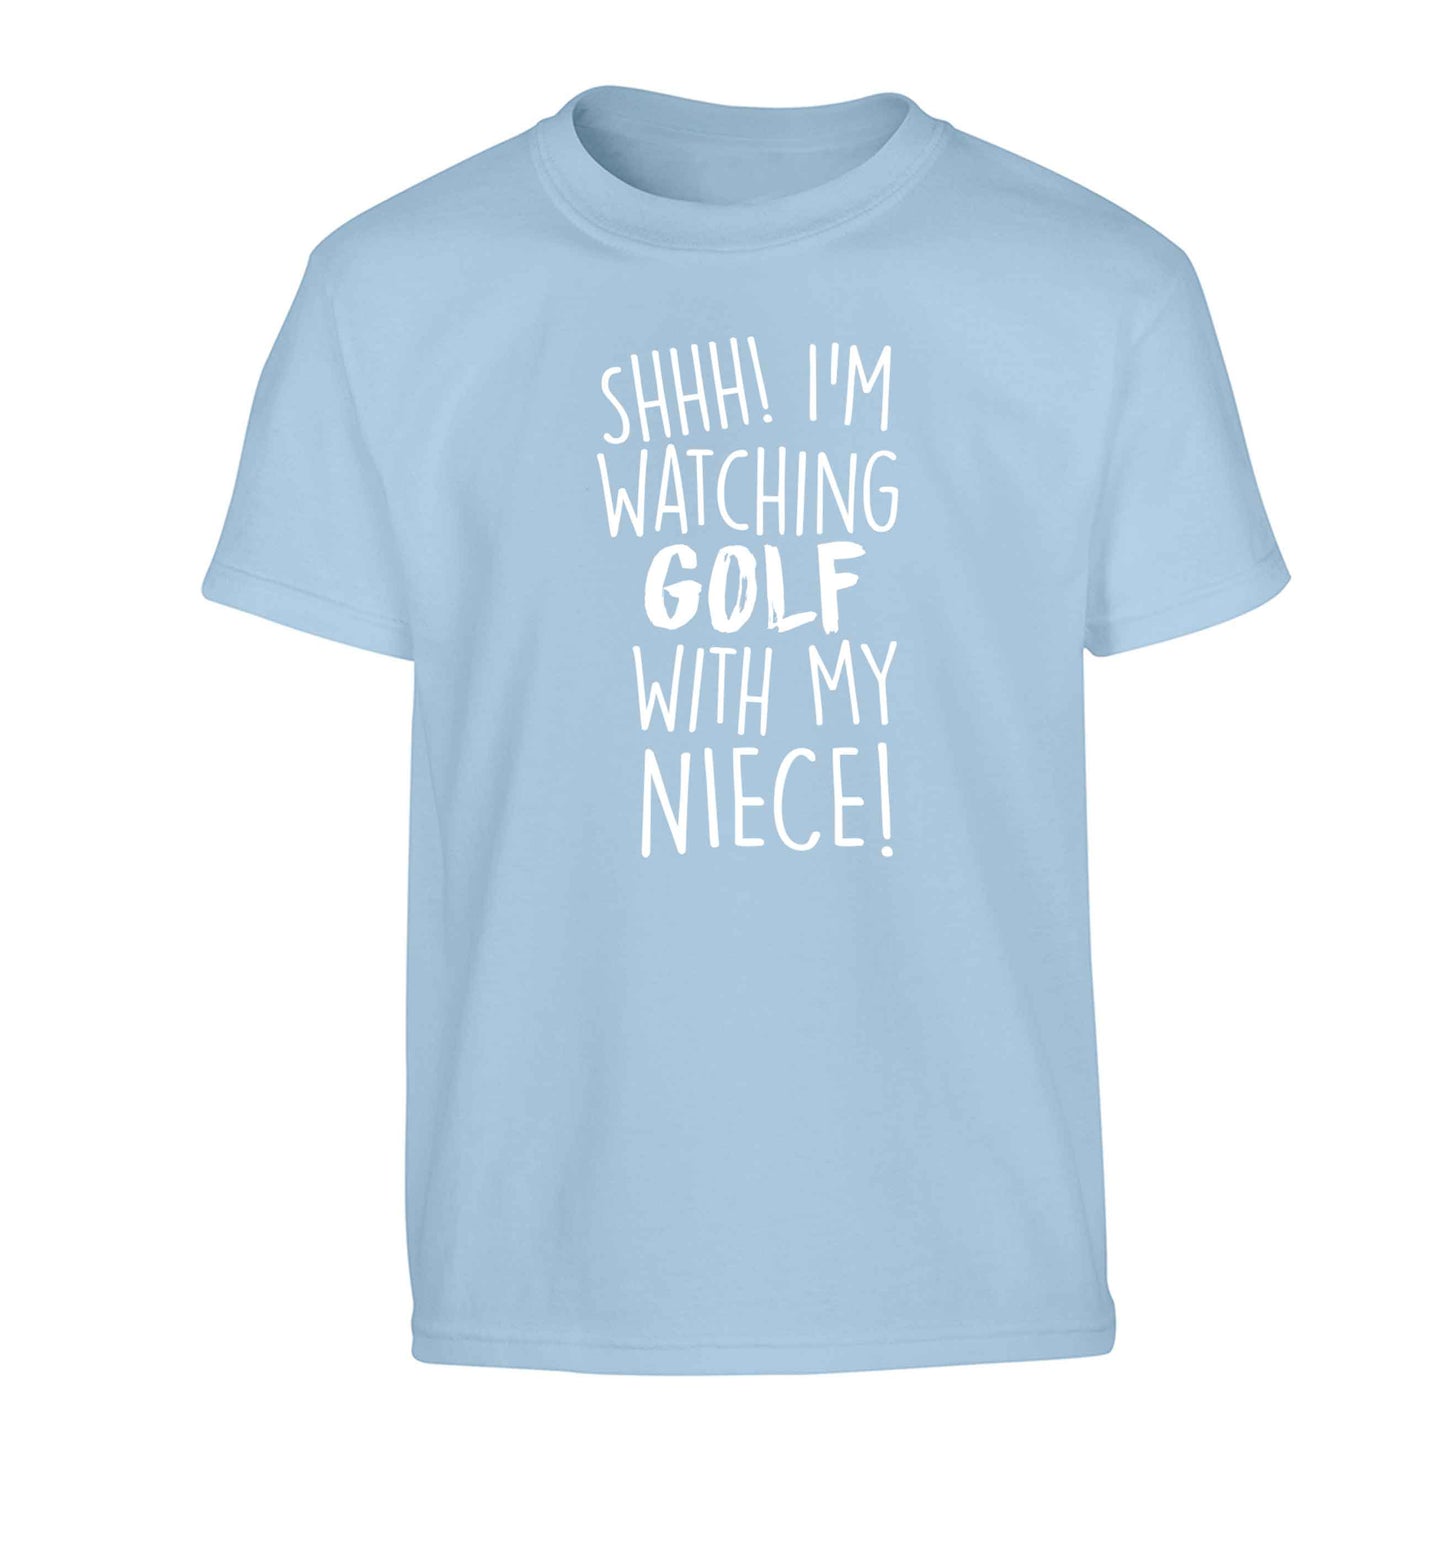 Shh I'm watching golf with my niece Children's light blue Tshirt 12-13 Years